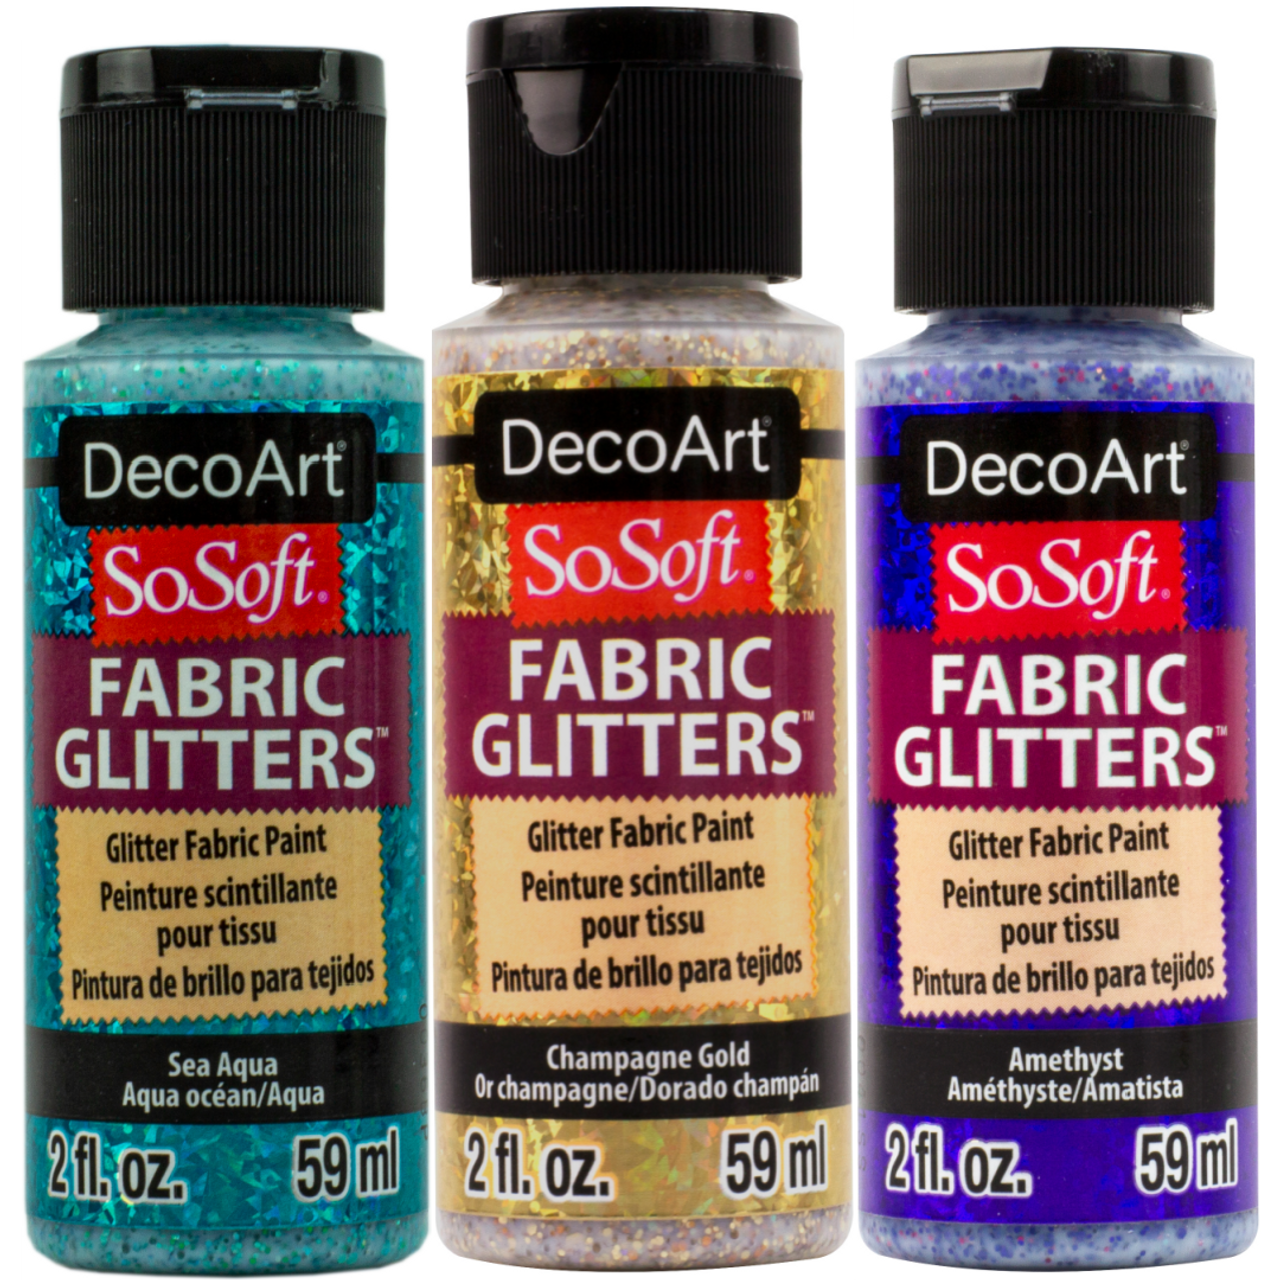 Acrylic Paint - Fabric Paint - DecoArt Stylin' Leather Paint - DecoArt  Acrylic Paint and Art Supplies